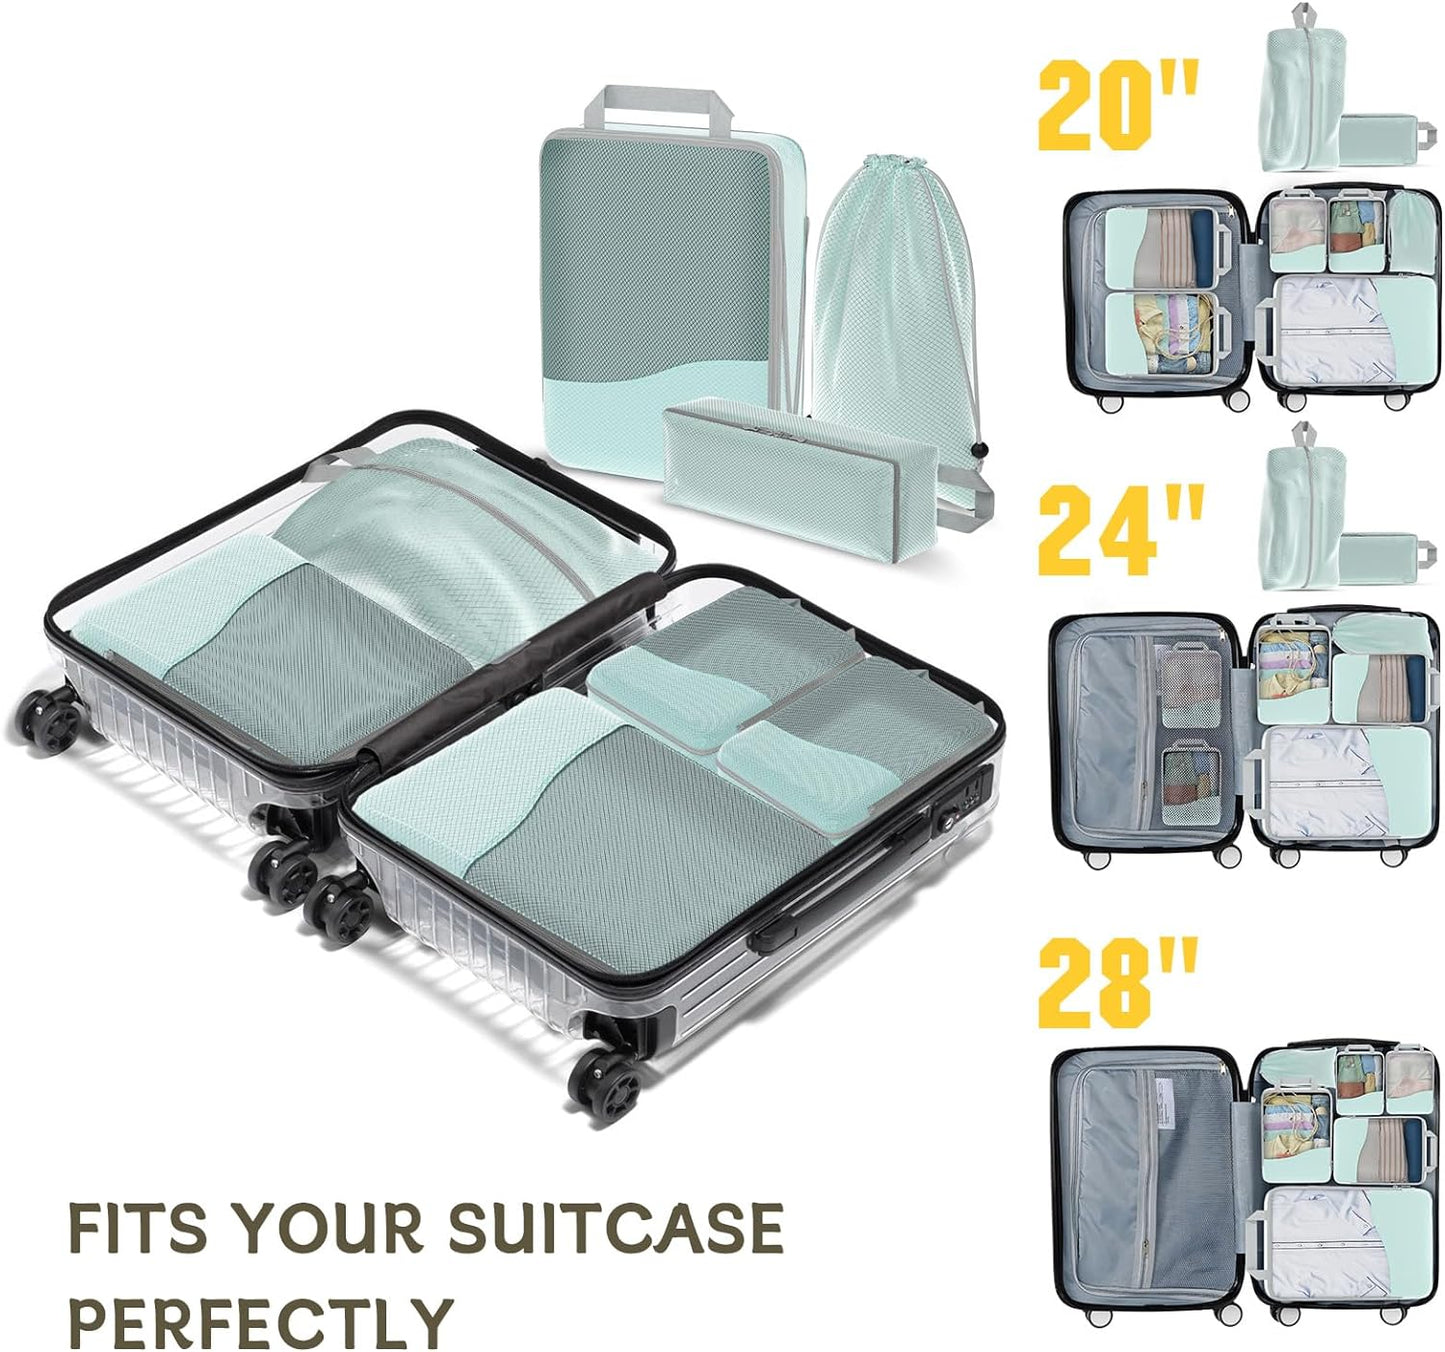 Compression Packing Cubes 6/8 Set, Dual Zipper Compression Packing Cubes for Travel, See-Through Mesh Packing Bags for Suitcases, packing cubes with shoe bag